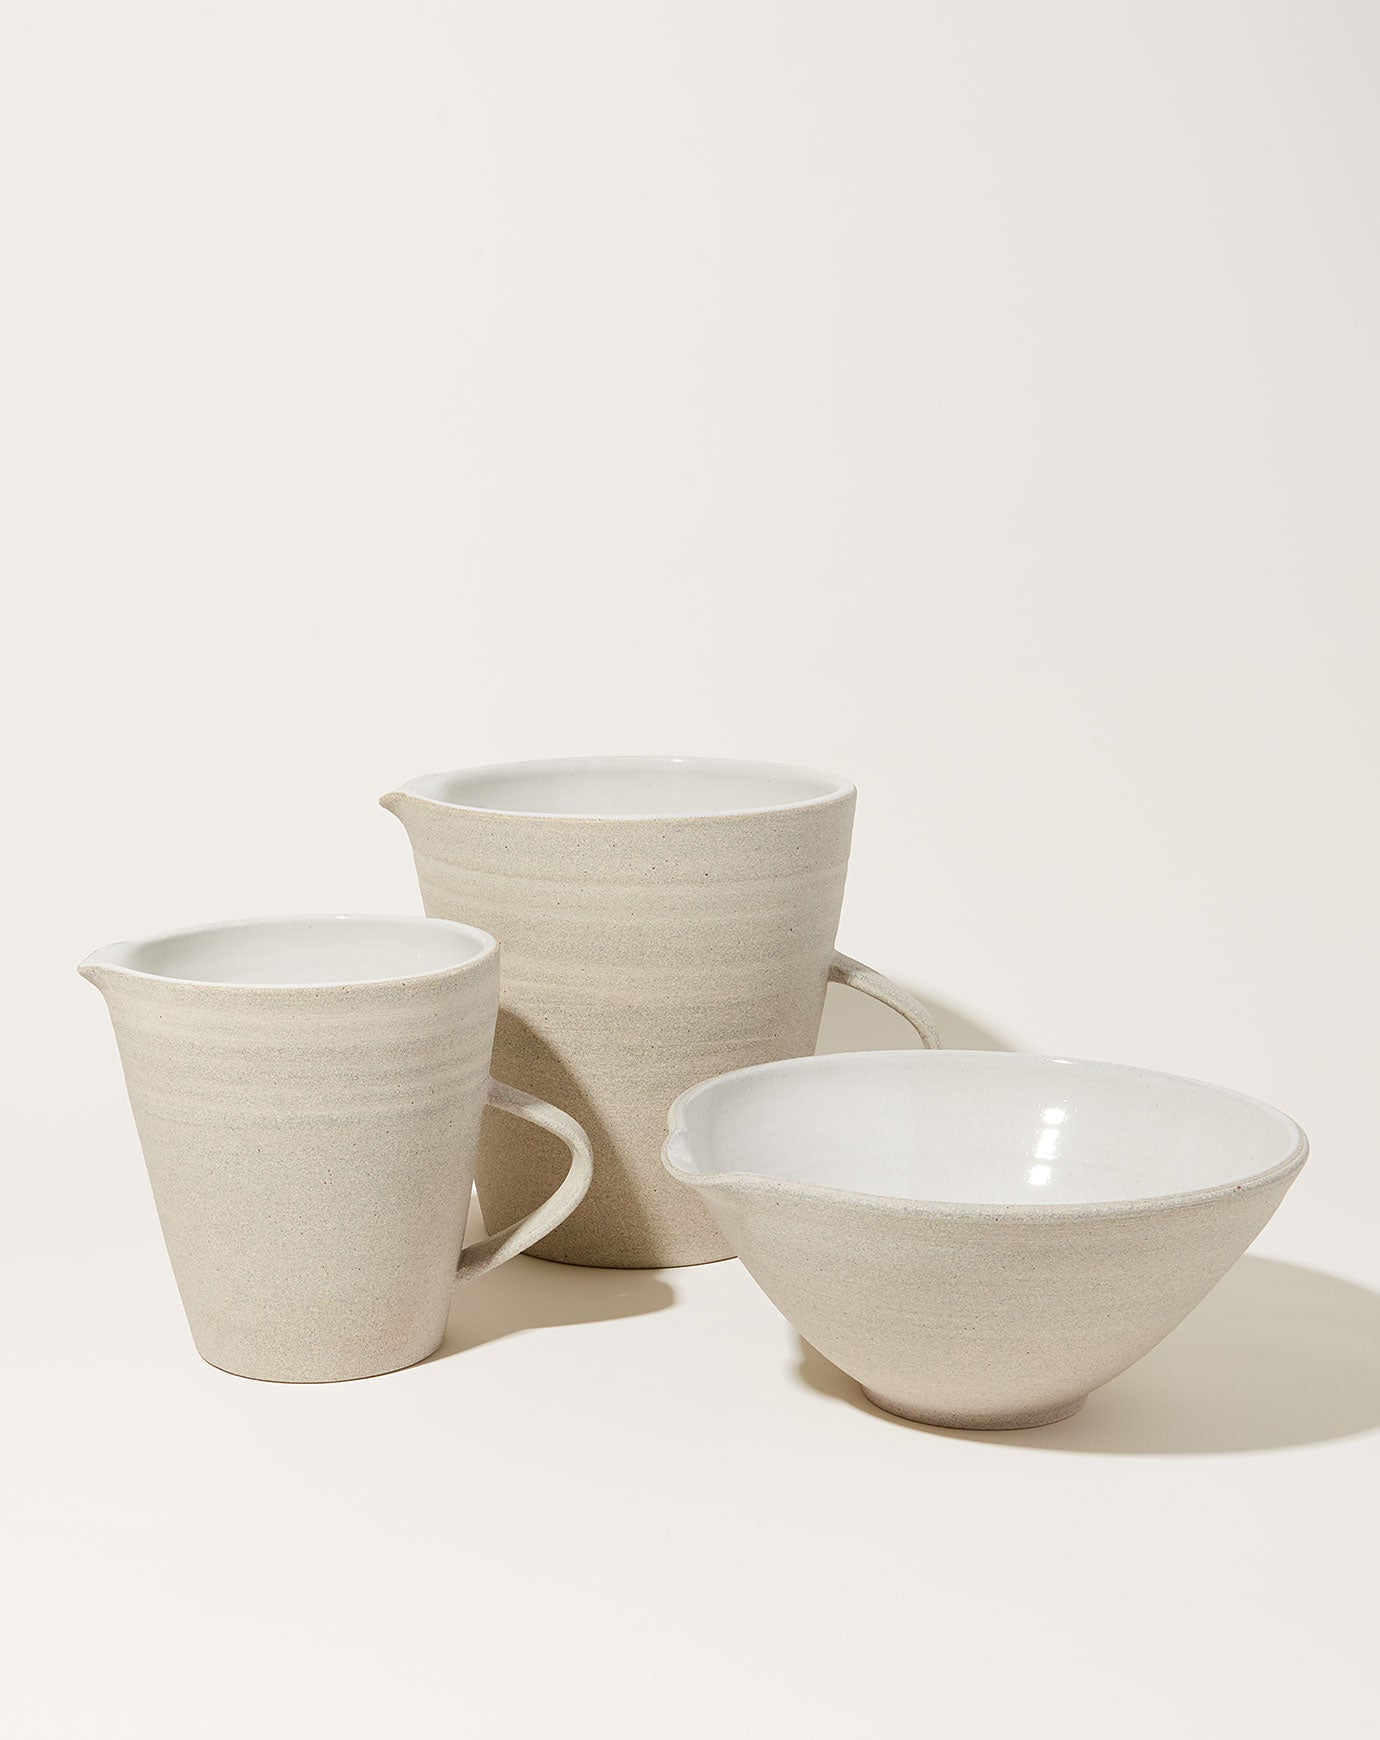 Sheldon Ceramics Vermont Pour Mixing Bowl